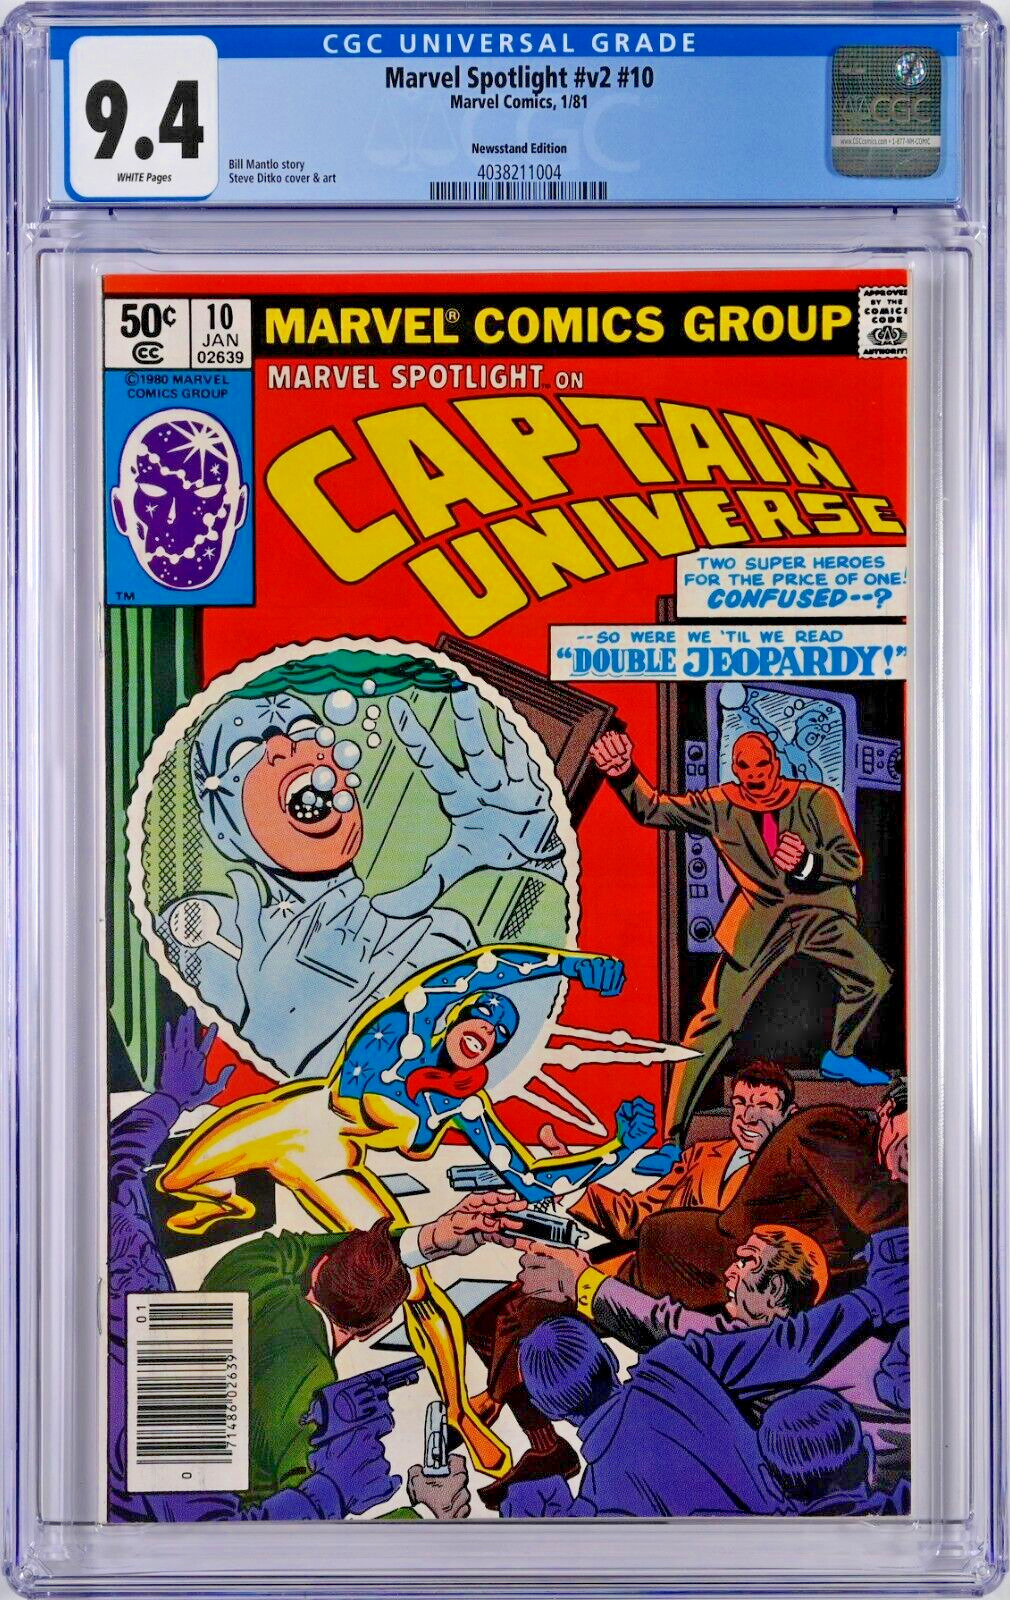 Marvel Spotlight v2 #10 CGC 9.4 (Jan 1981) Captain Universe, Ditko, Newsstand